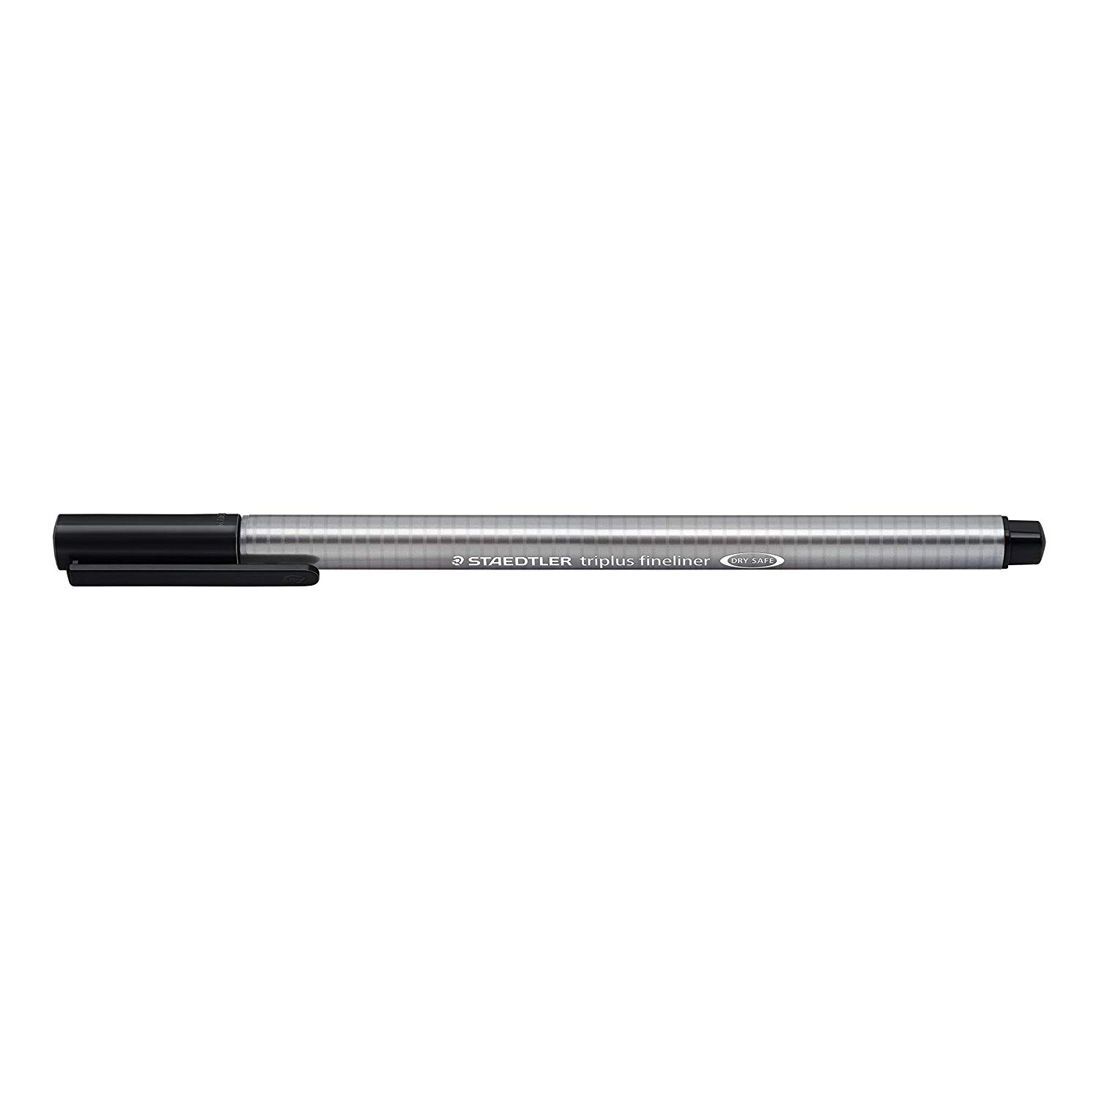 Staedtler Rollerball pen, 3mm, Fine pen, Black, 334.9